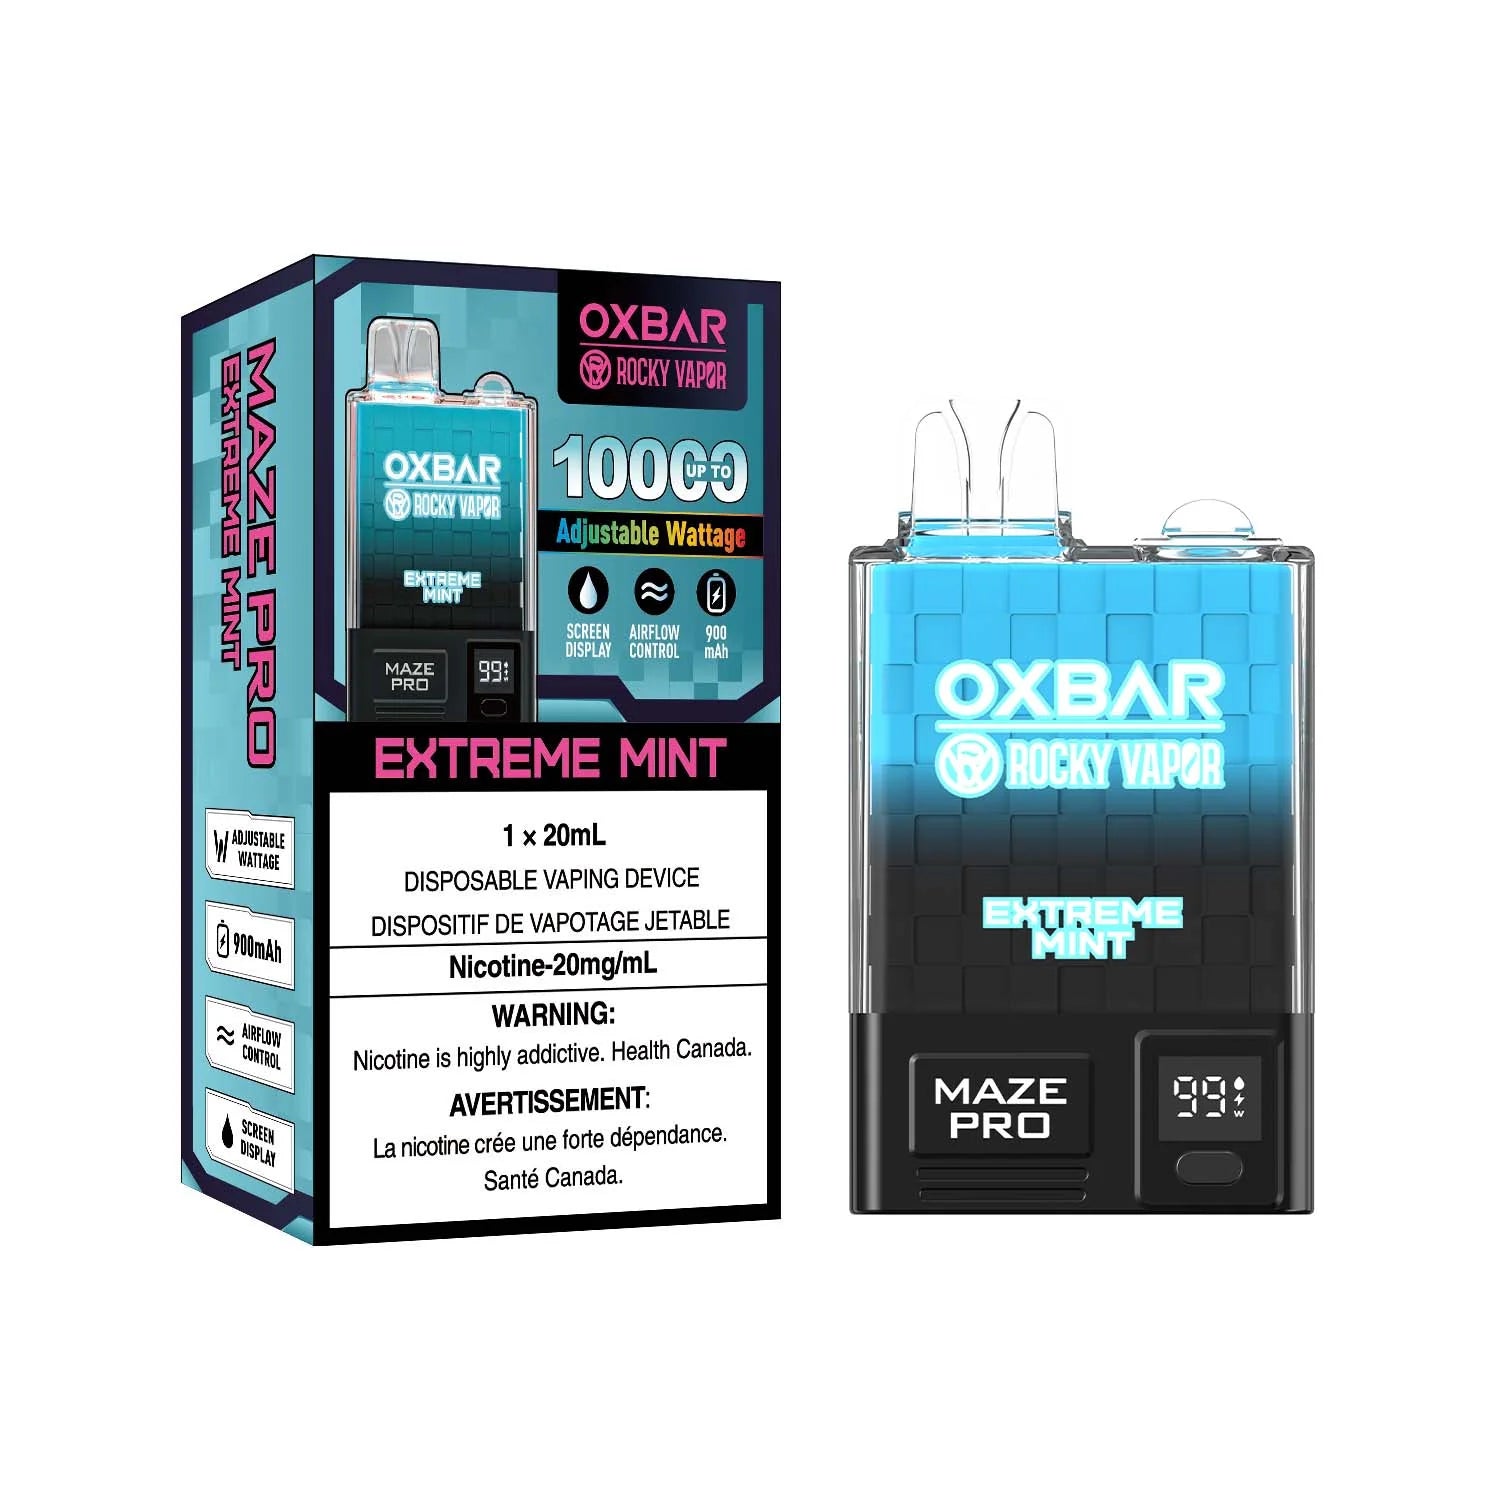 EXTREME MINT - ROCKY VAPOR x OXBAR MAZE PRO - 20mg - 5pc/box